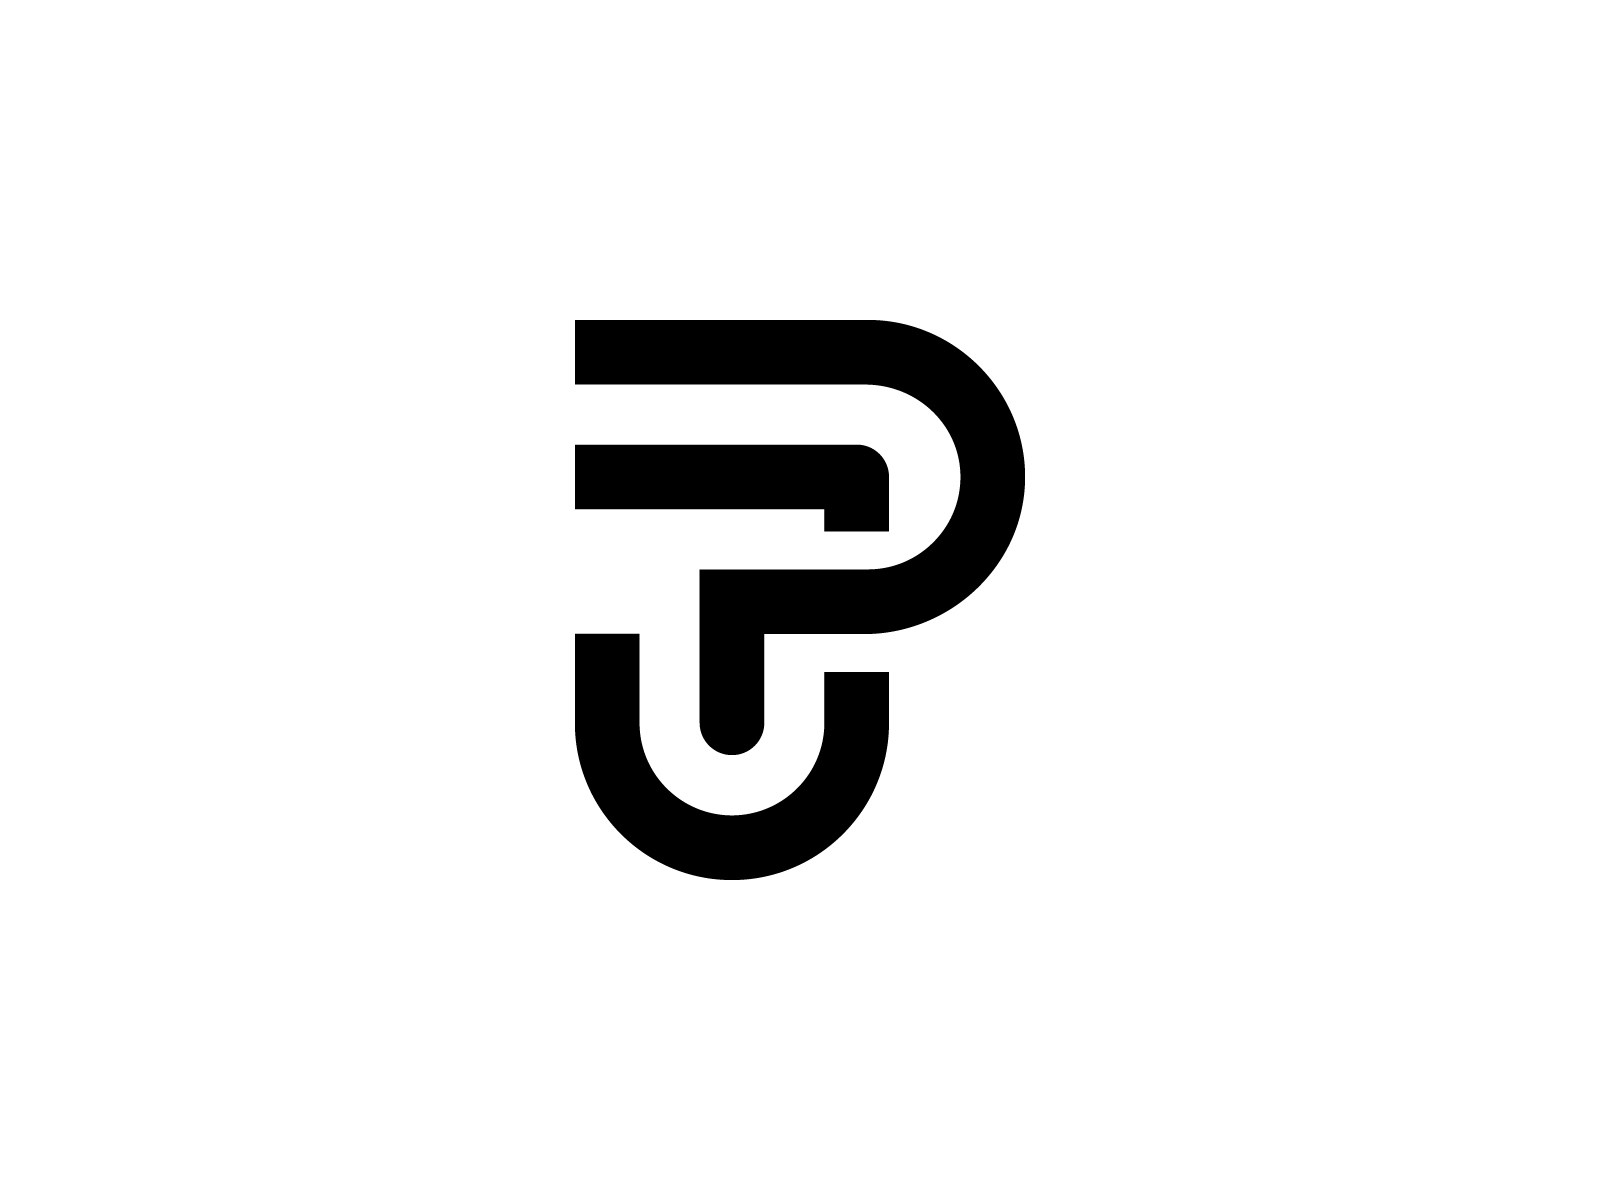 PJ diamond logo concept by Dandes on Dribbble